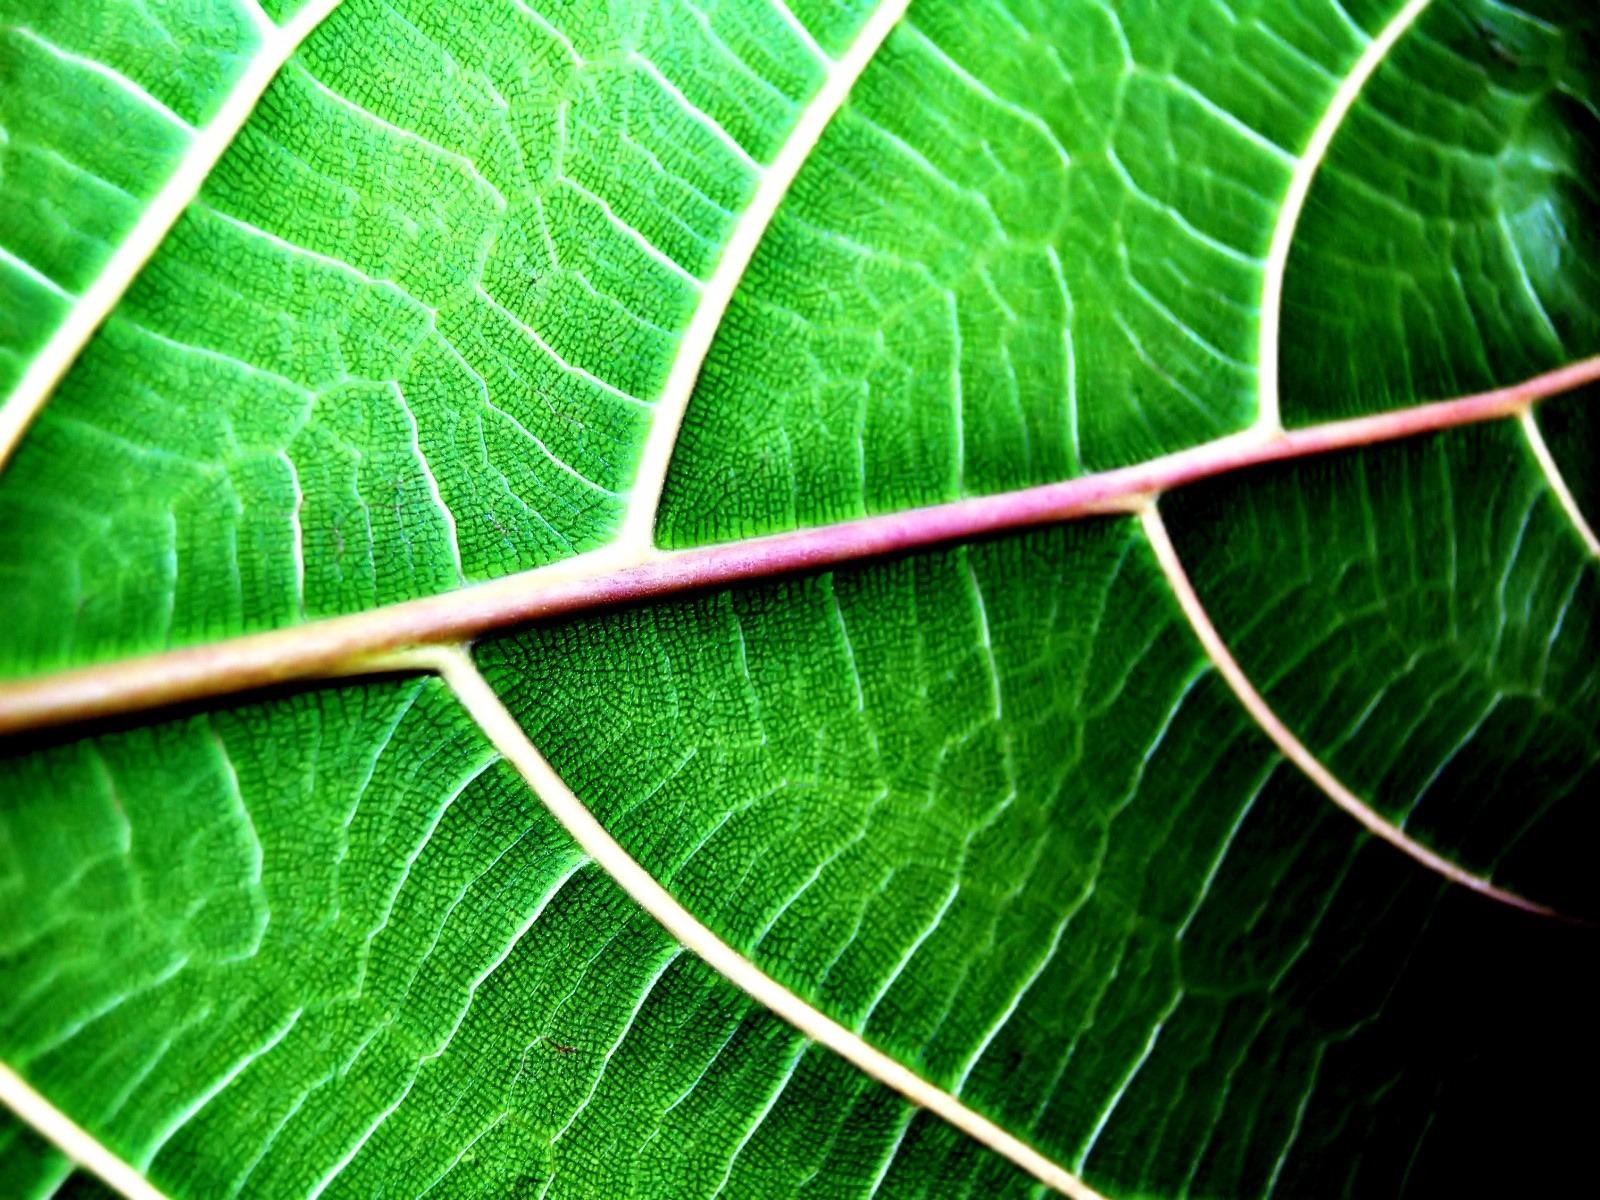 Leaf structure Wallpaper Plants Nature Wallpaper in jpg format